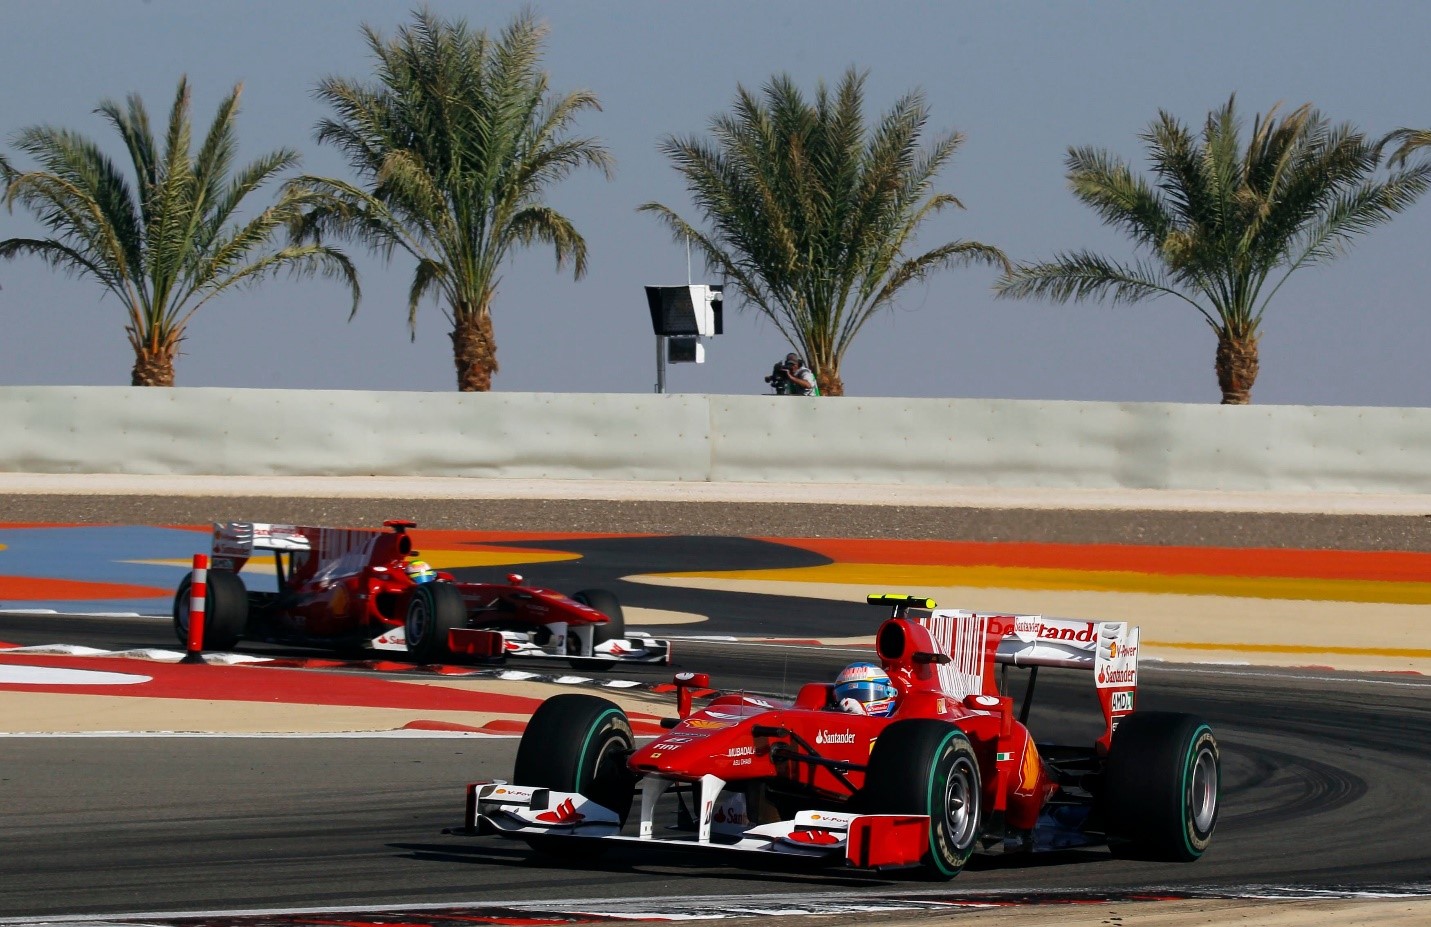 Fernando Alonso leads teammate Felipe Massa during the Bahrain Grand Prix at Sakhir circuit in Manama on March 14, 2010. 